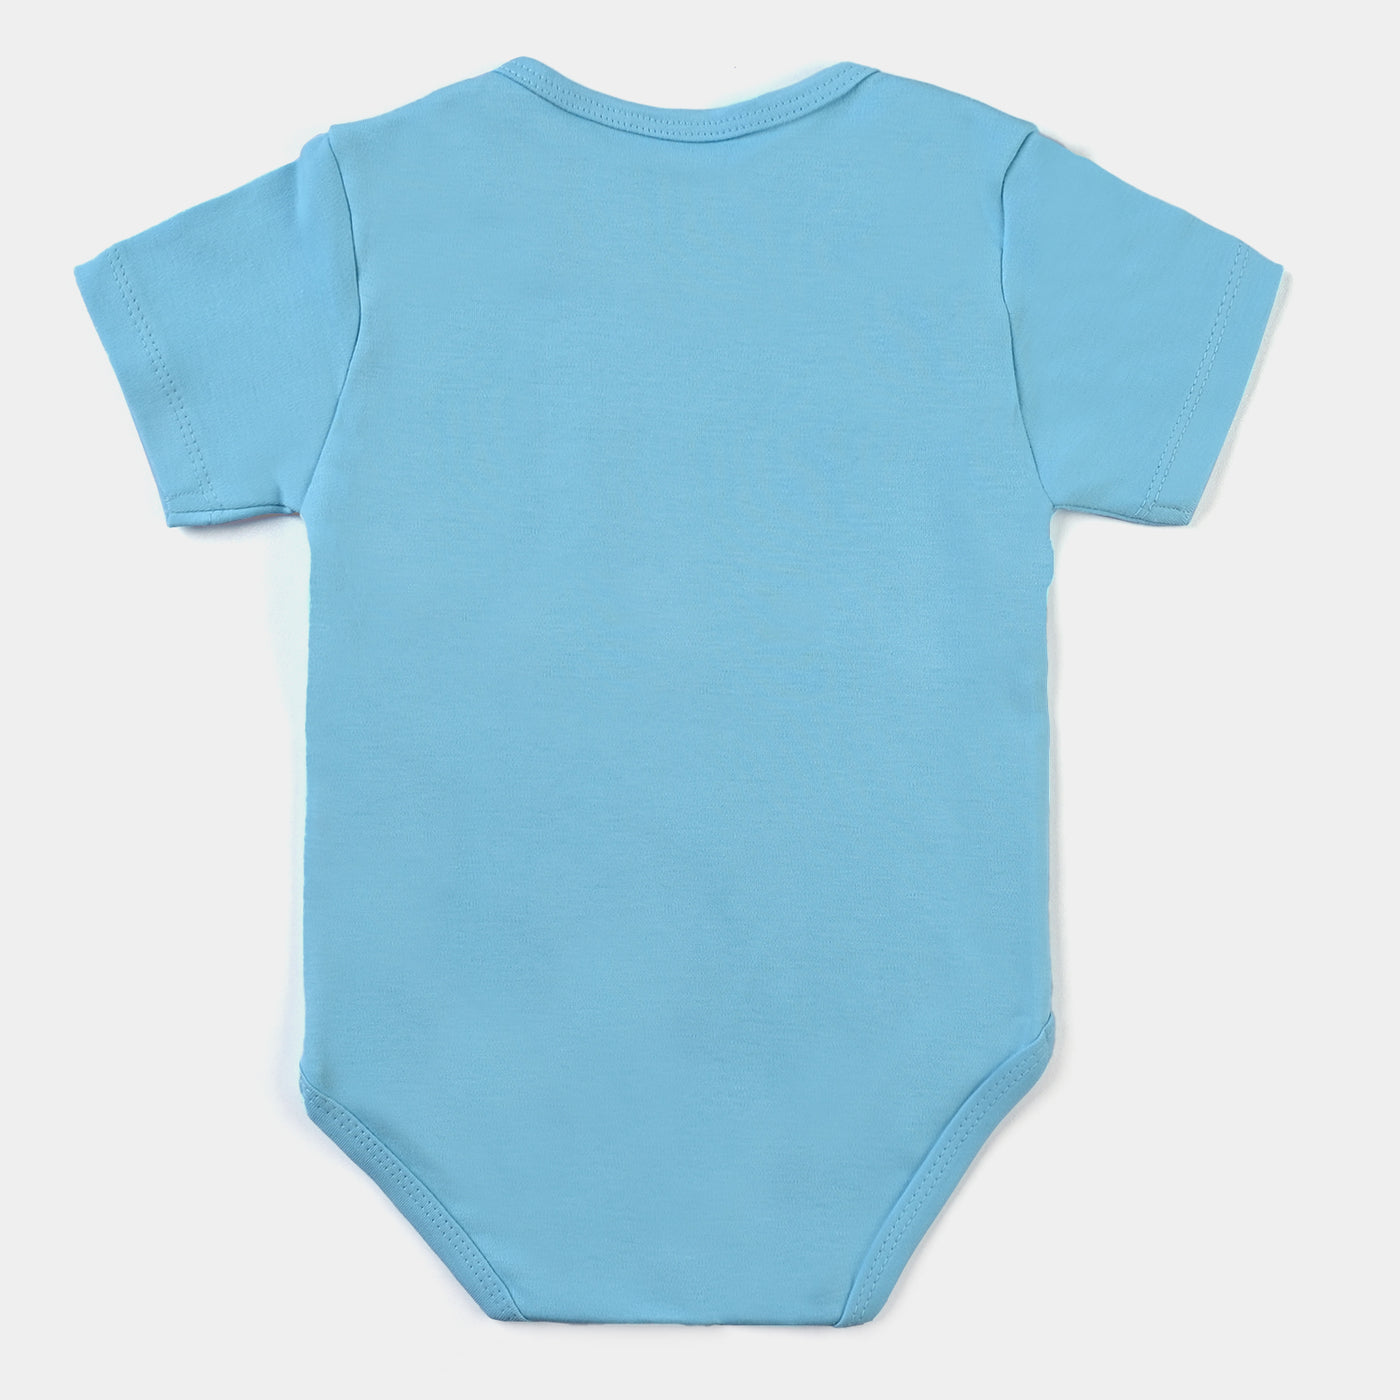 Infant Unisex Cotton Basic Romper Dada & Dadi-Tropical Blue